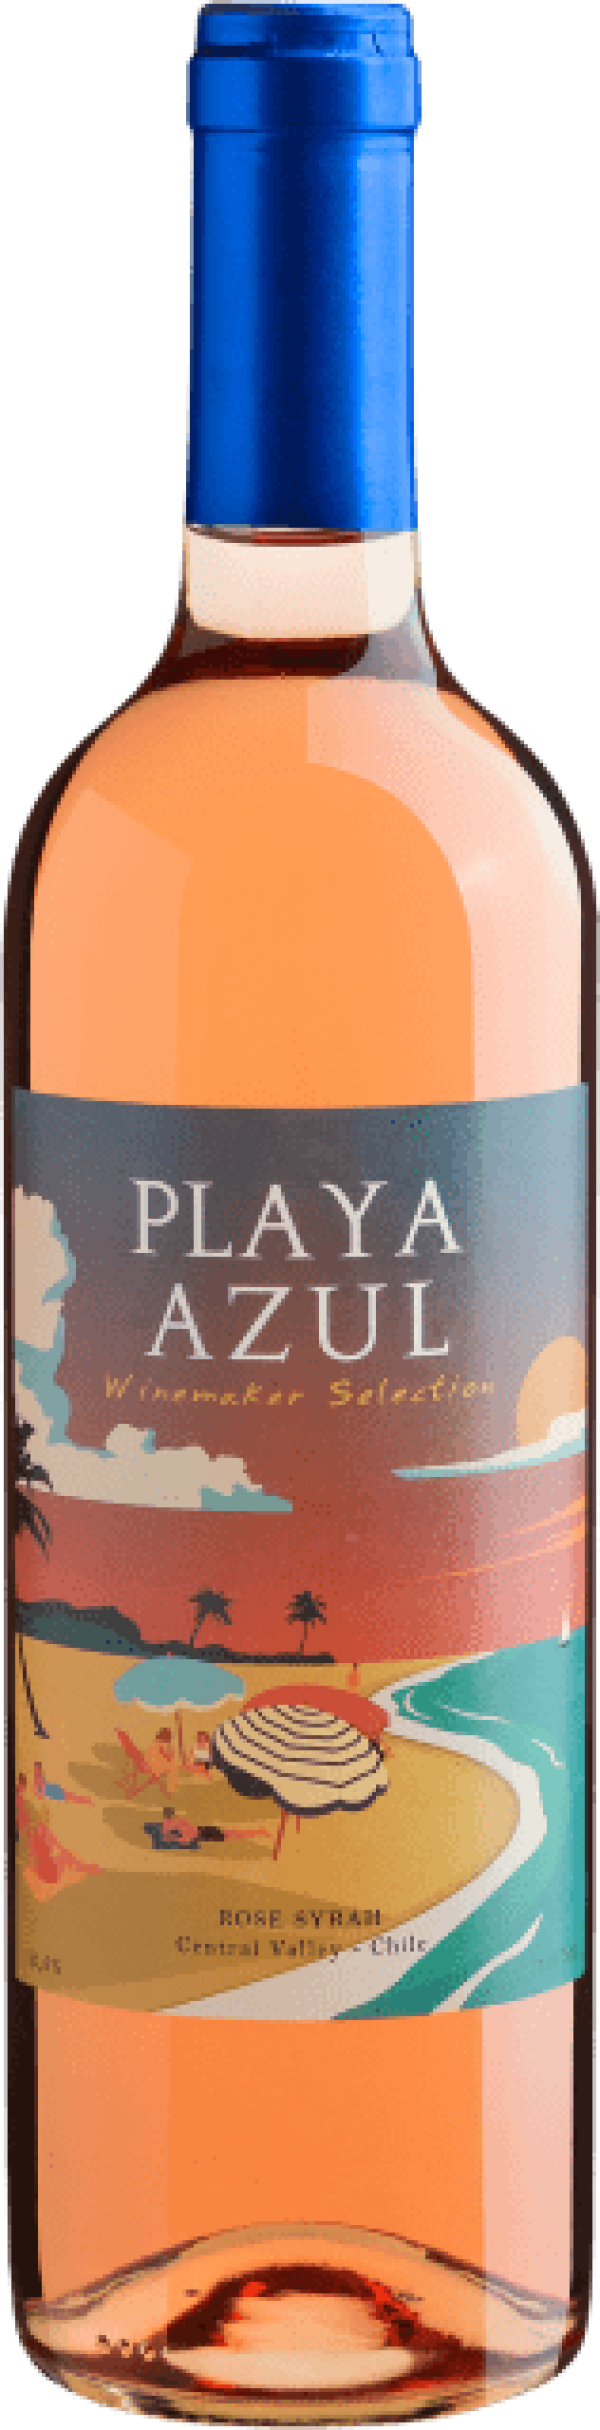 Playa Azul Winemaker Selection Rose Syrah Central Valley D.O. 2021